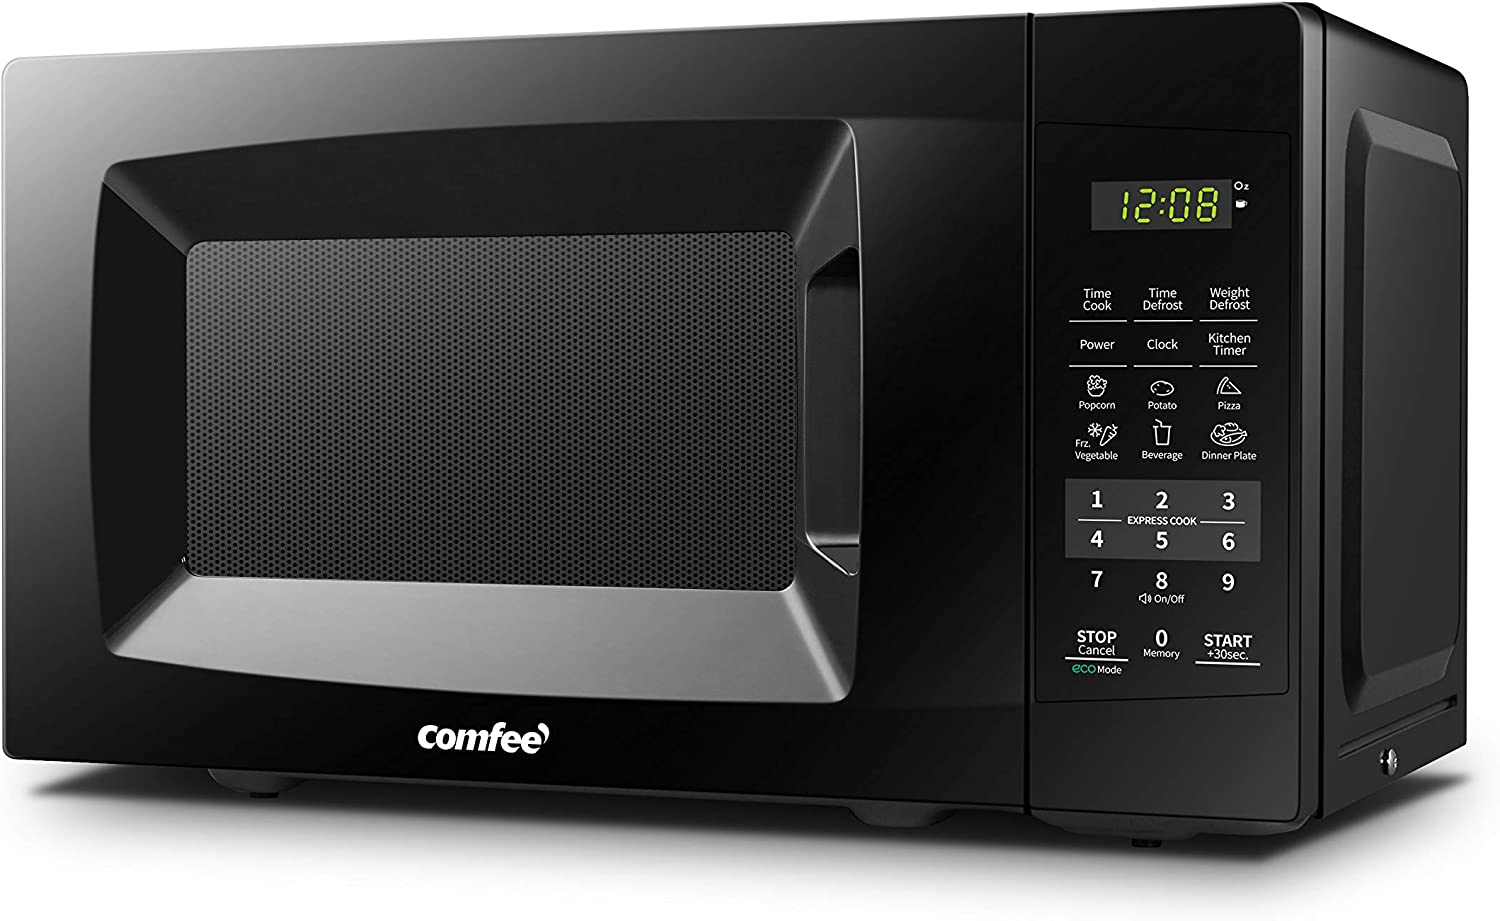 COMFEE’ Countertop Microwave Oven Logo